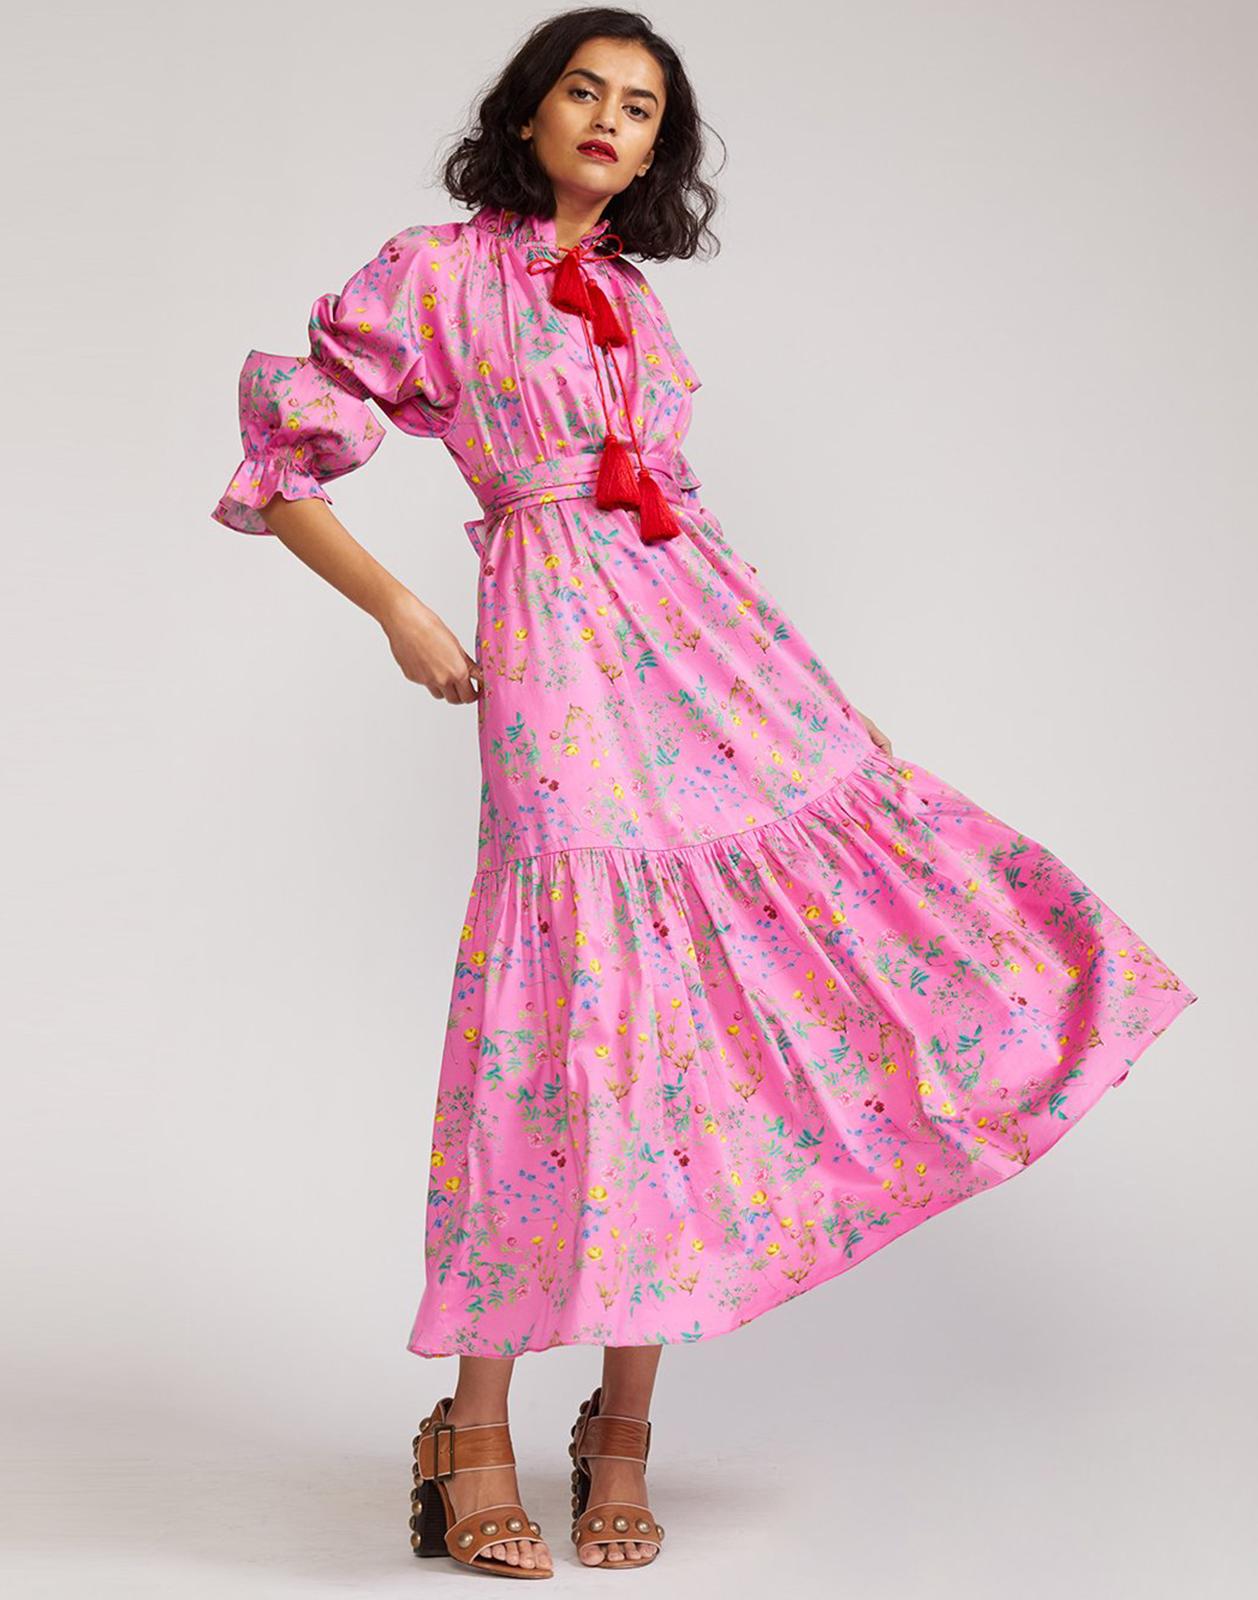 Cynthia Rowley Sanibel Cotton Dress in Pink